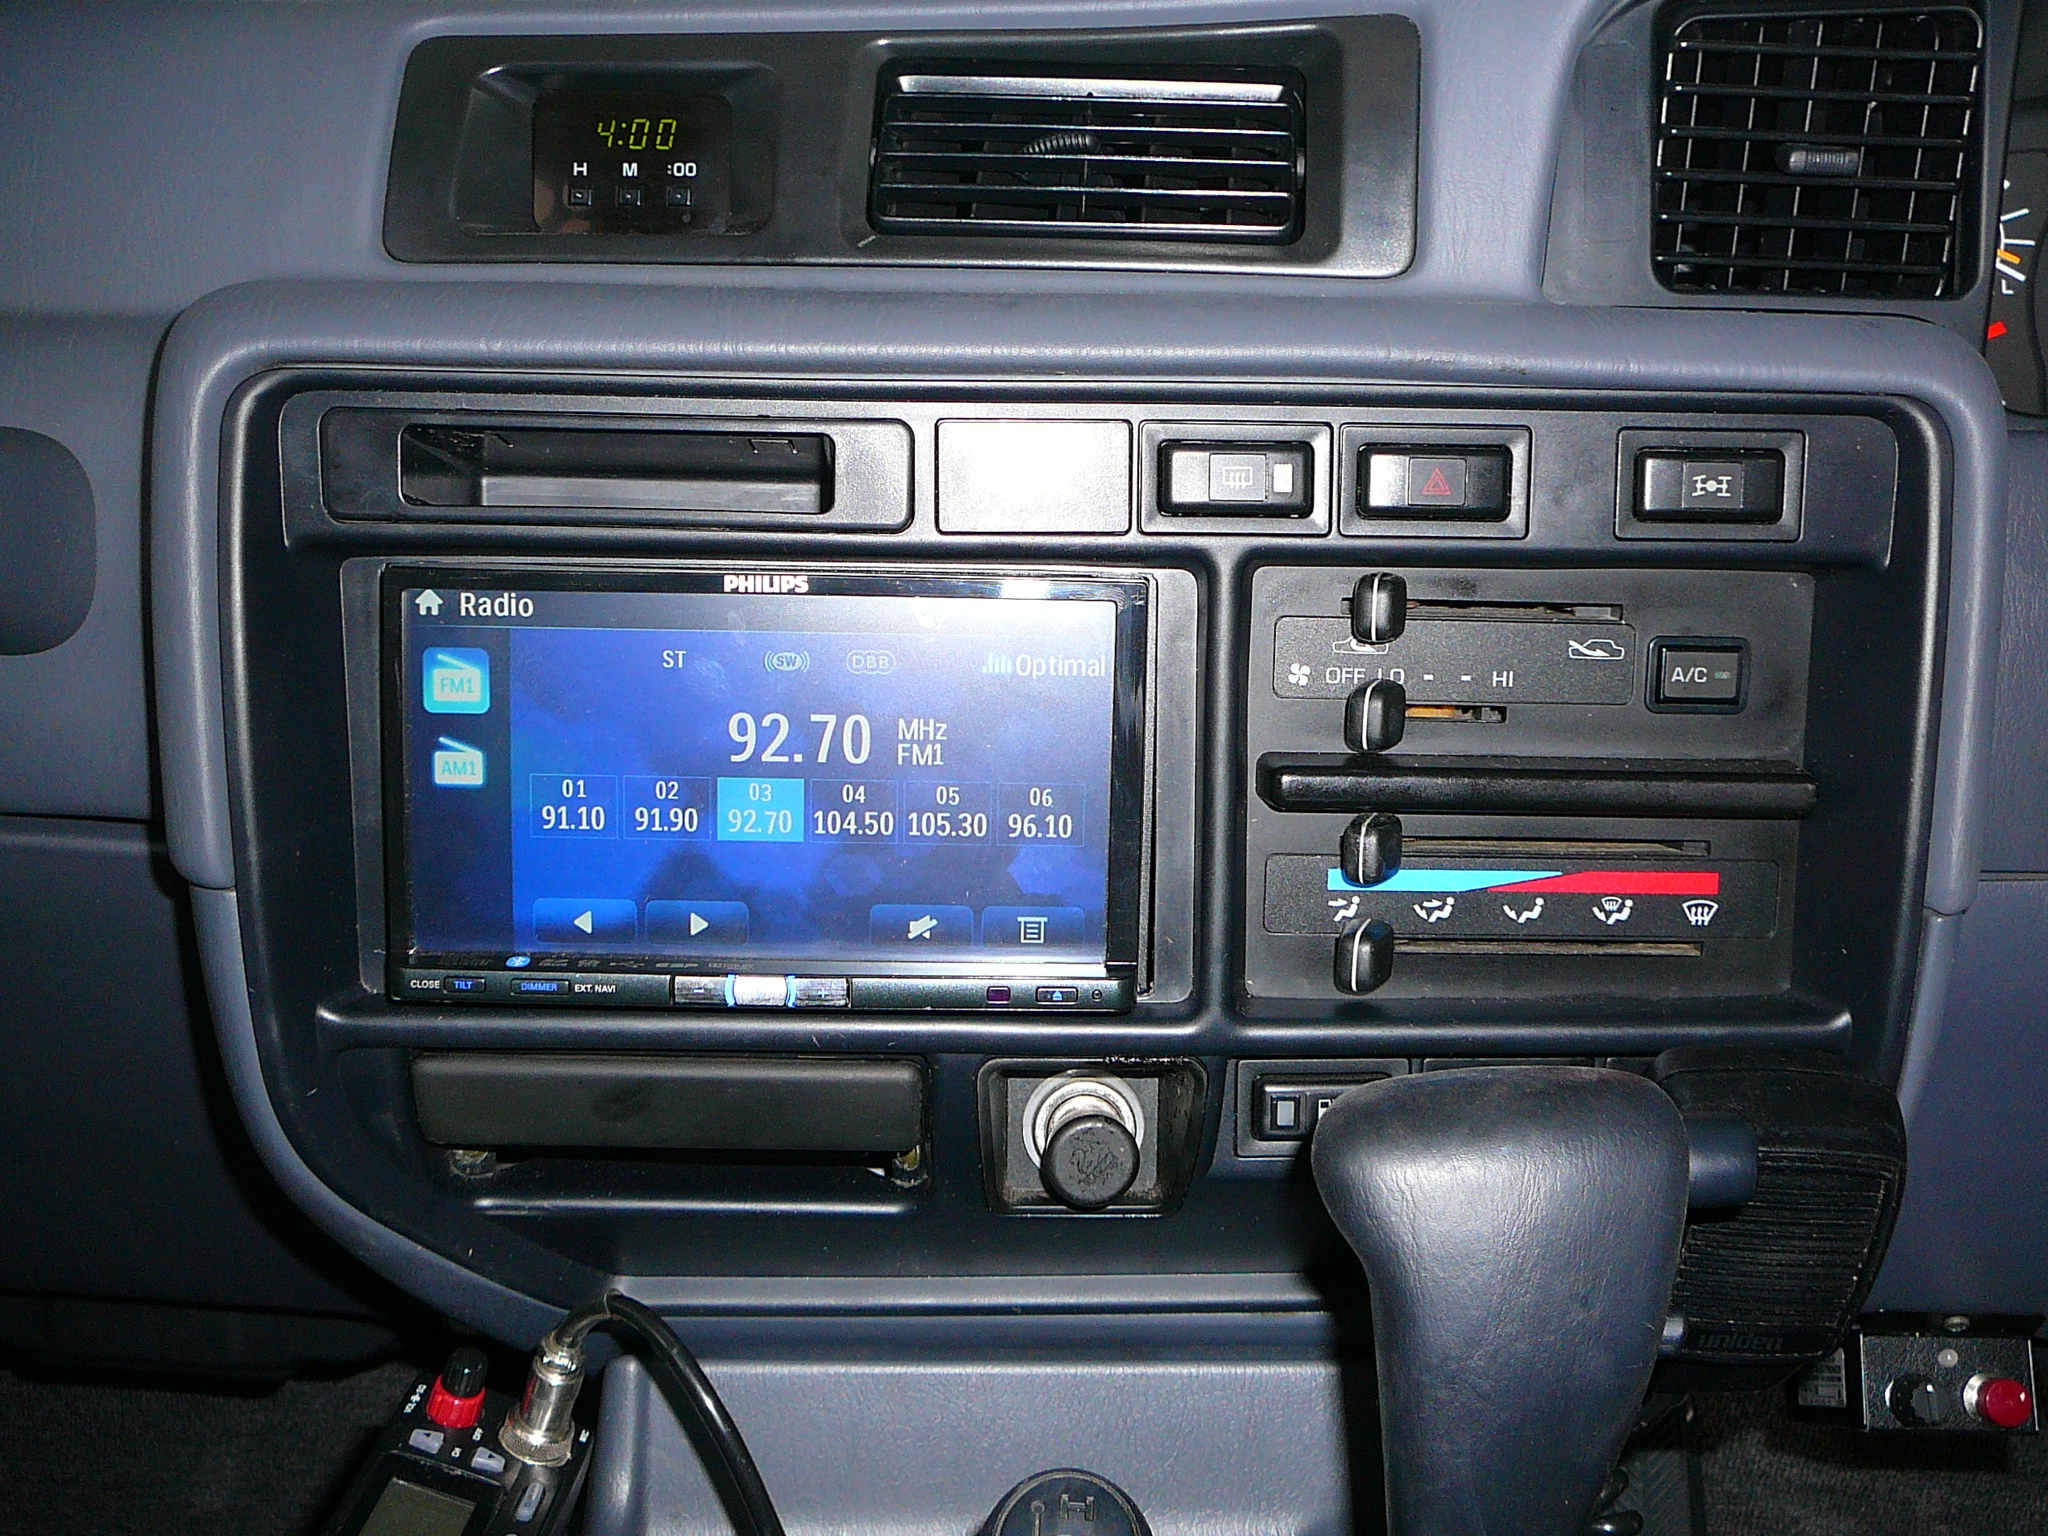 Toyota Landcruiser 80 Series In Dash DVD, CD, AM FM Radio, iPod, USB, Bluetooth Handsfree, Reverse Camera